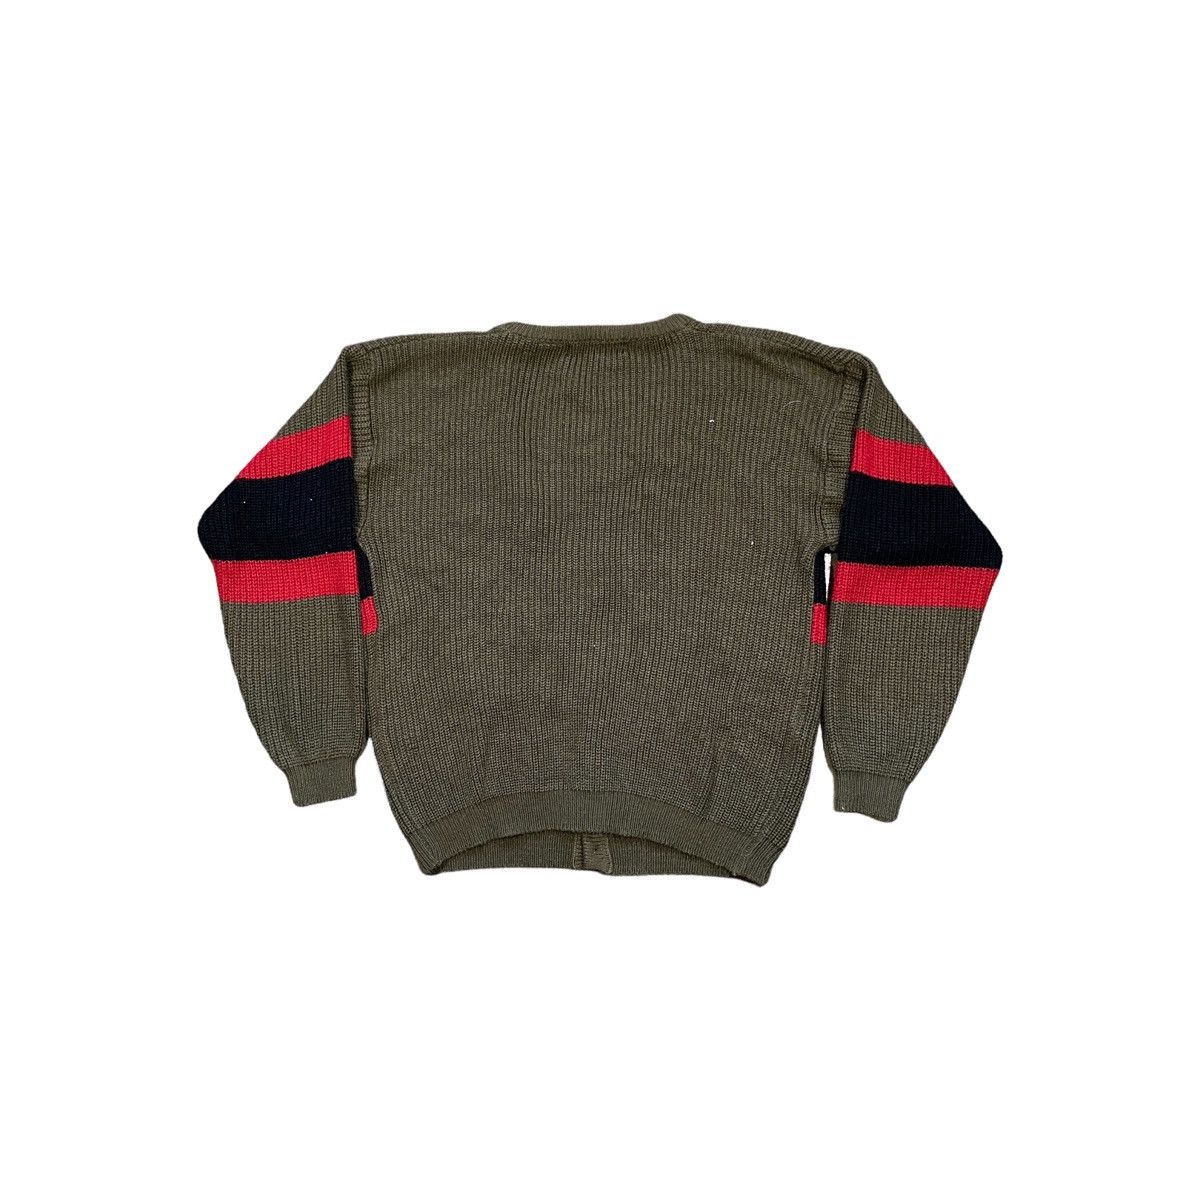 Vintage Vintage Zepellin Striped Cardigan Sweater Size US L / EU 52-54 / 3 - 4 Preview